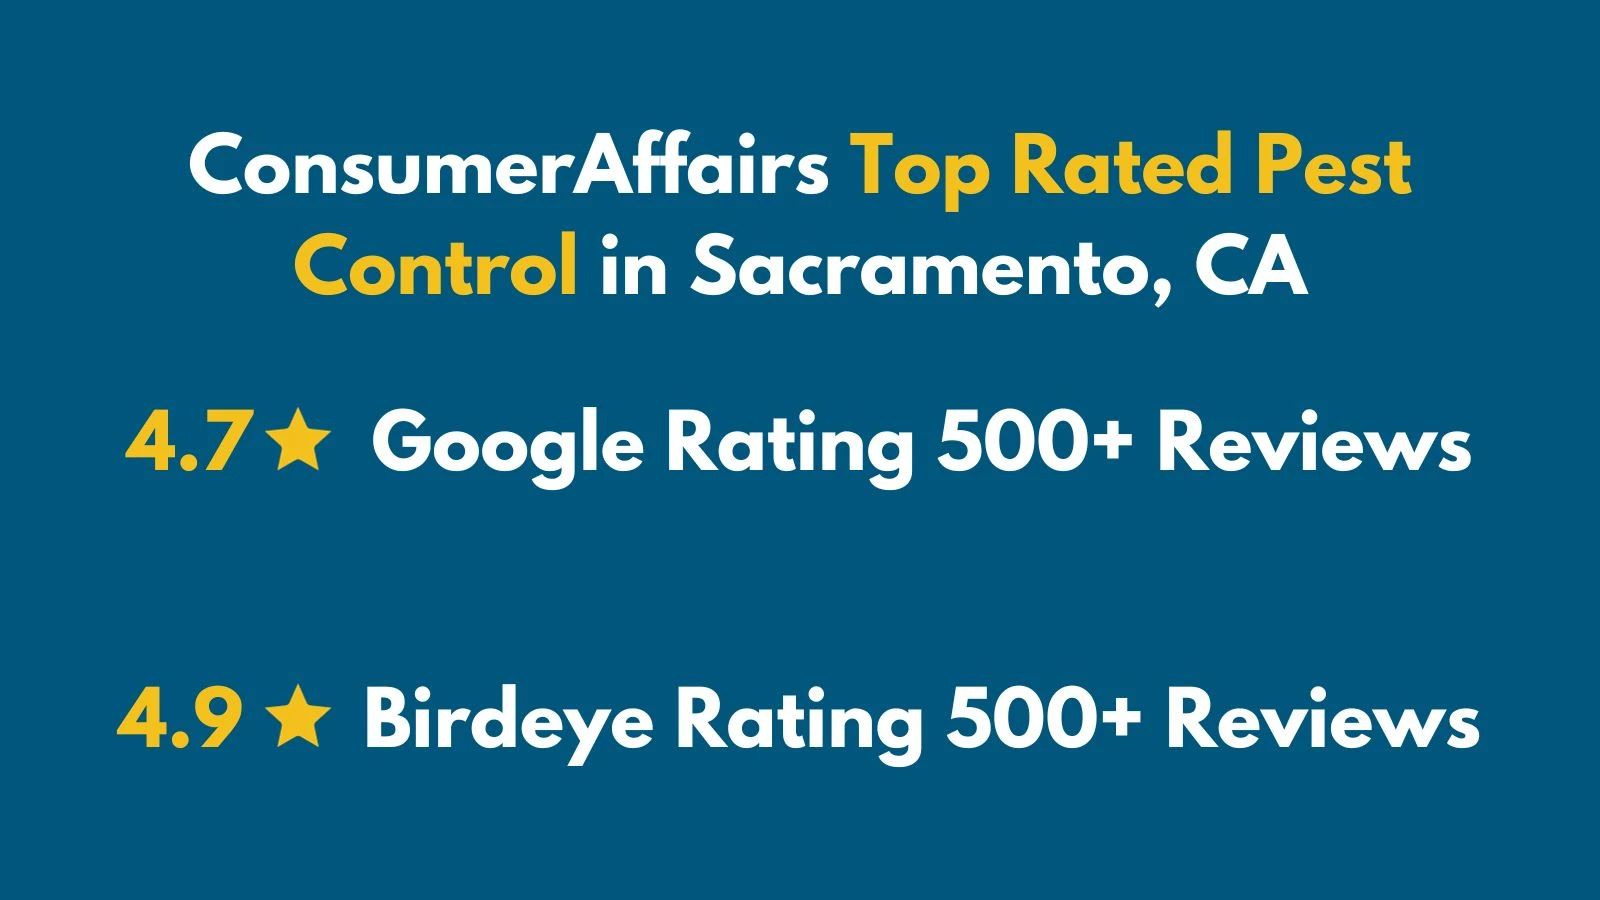 Consumer affairs top rated pest control in sacramento california.